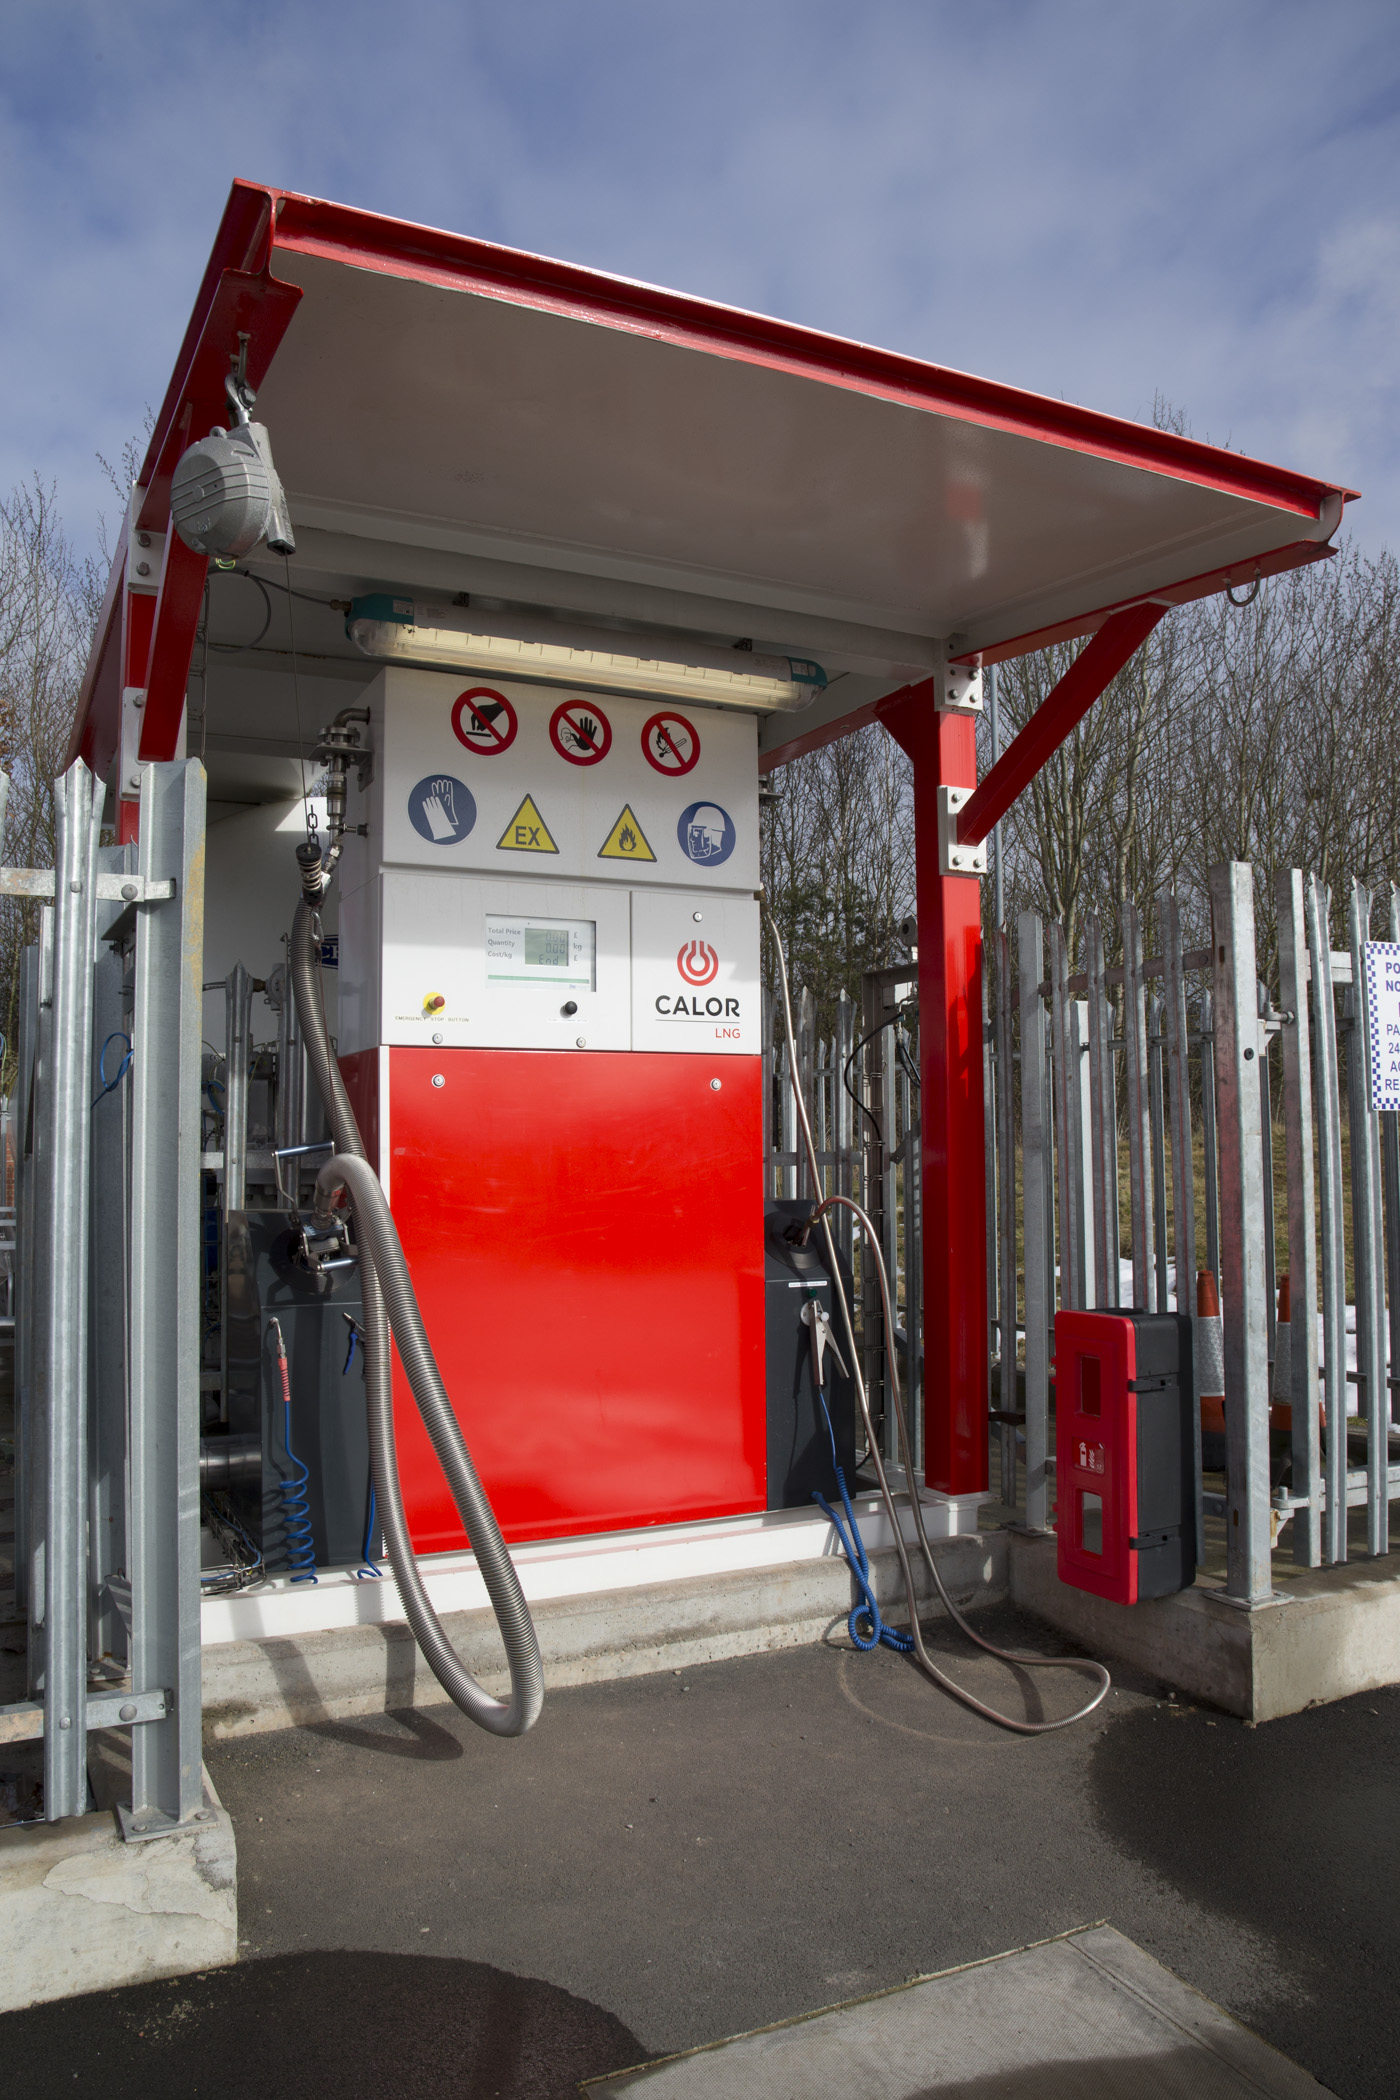 Calor LNG refuelling stations for UK roads 